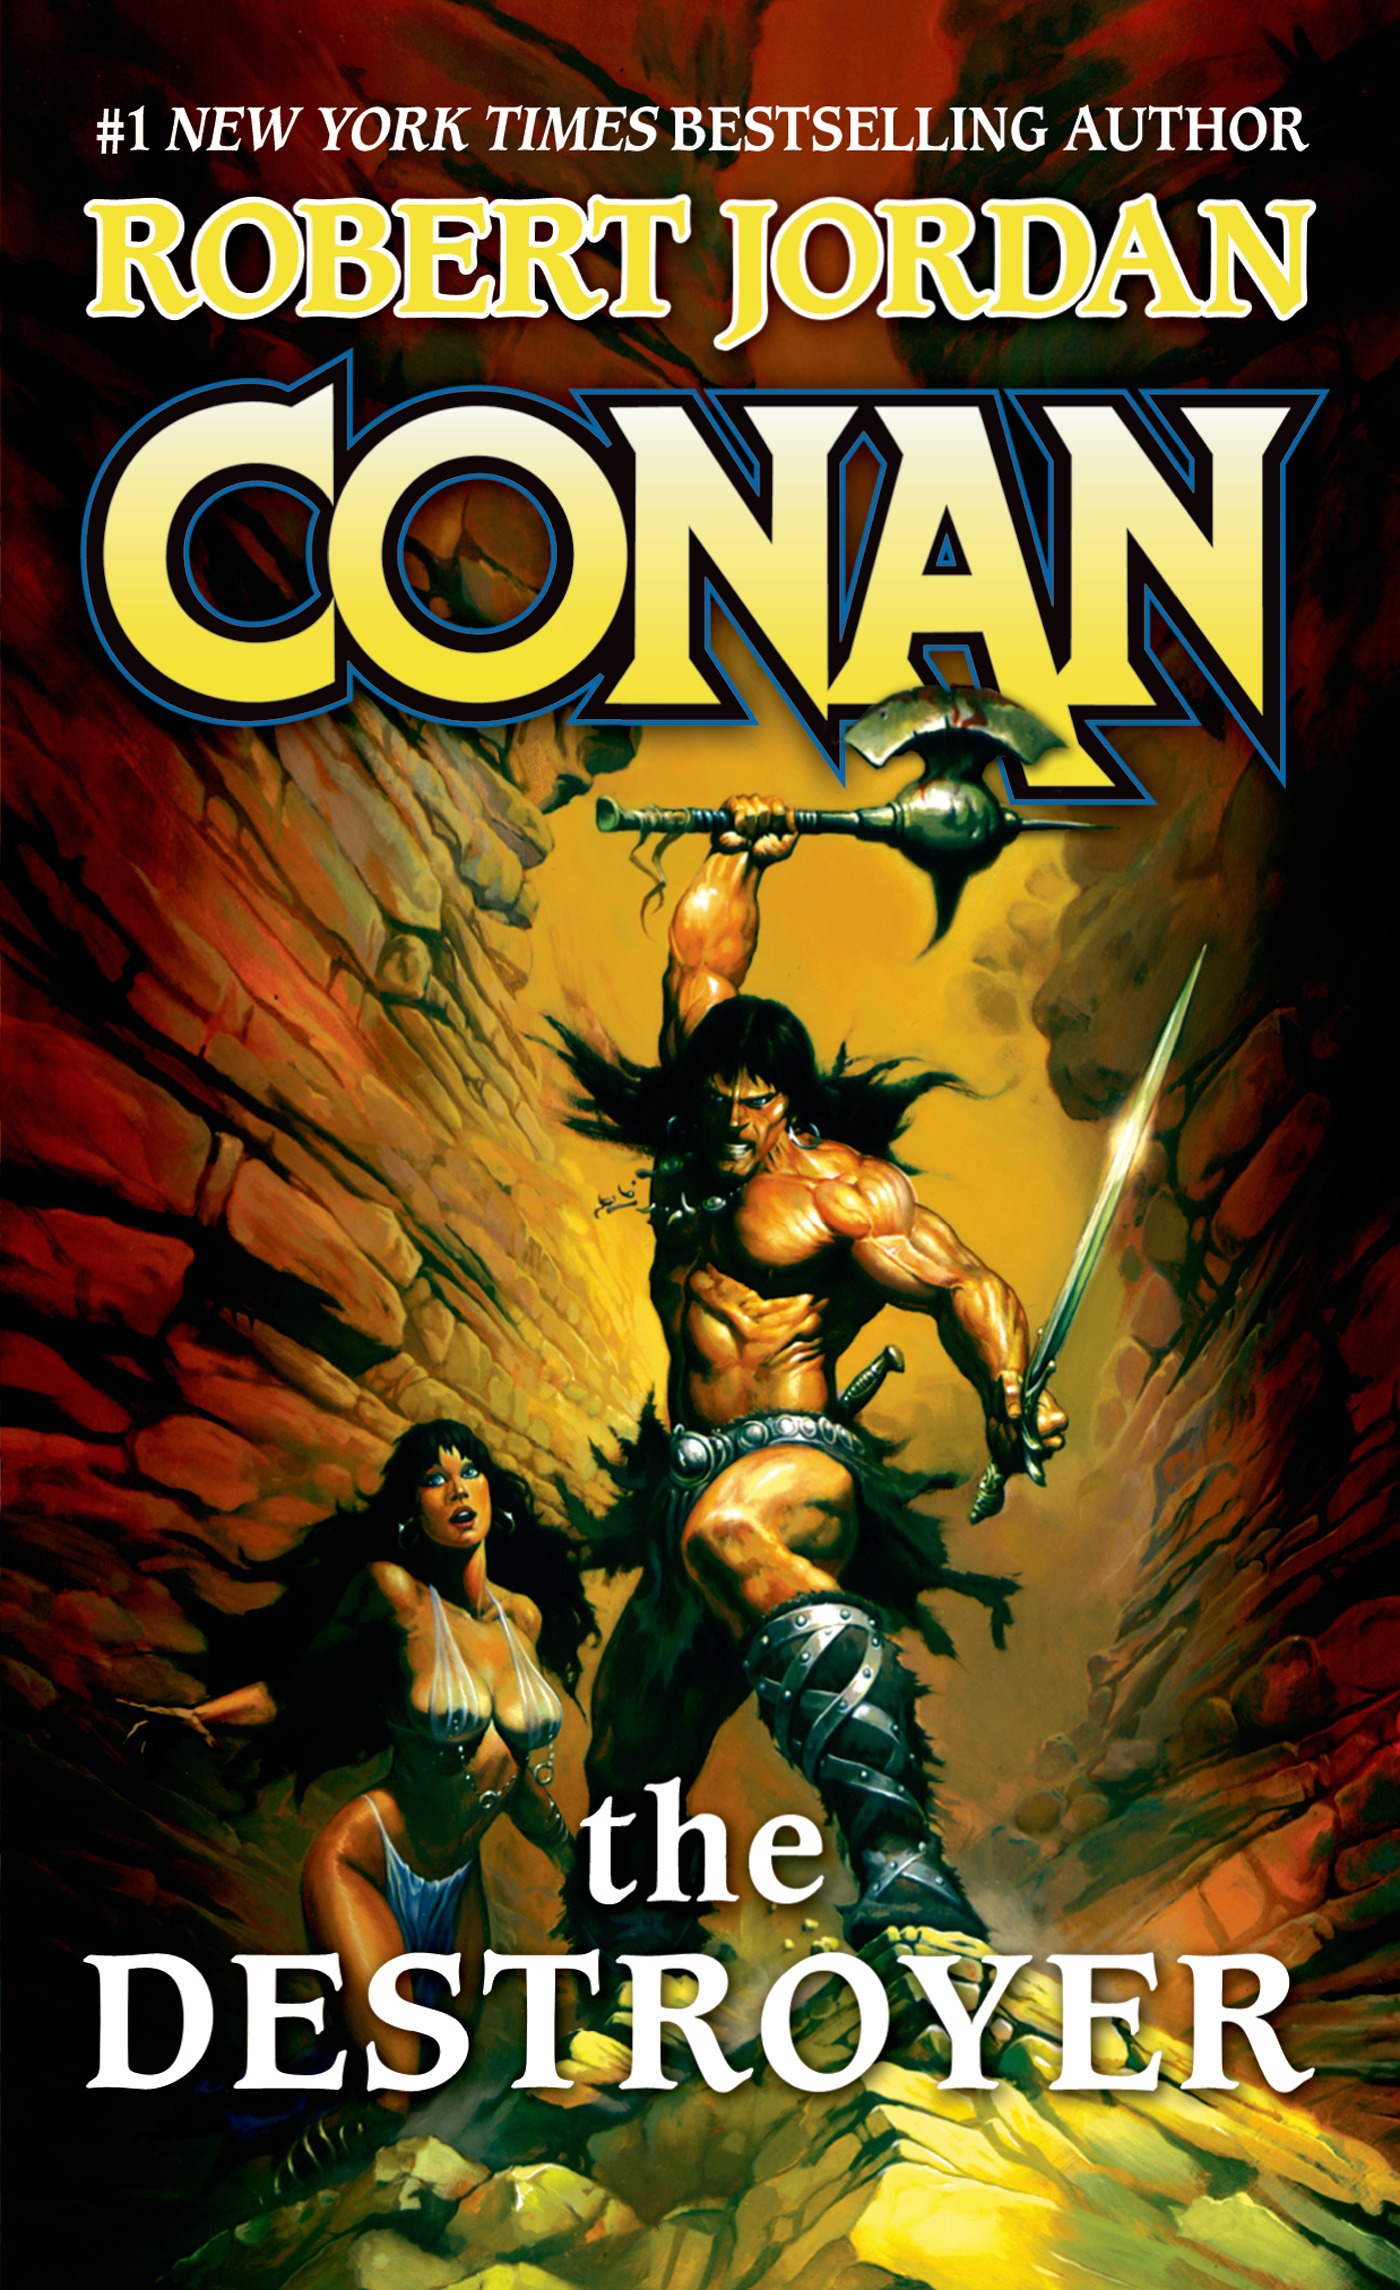 Conan The Destroyer by Robert Jordan